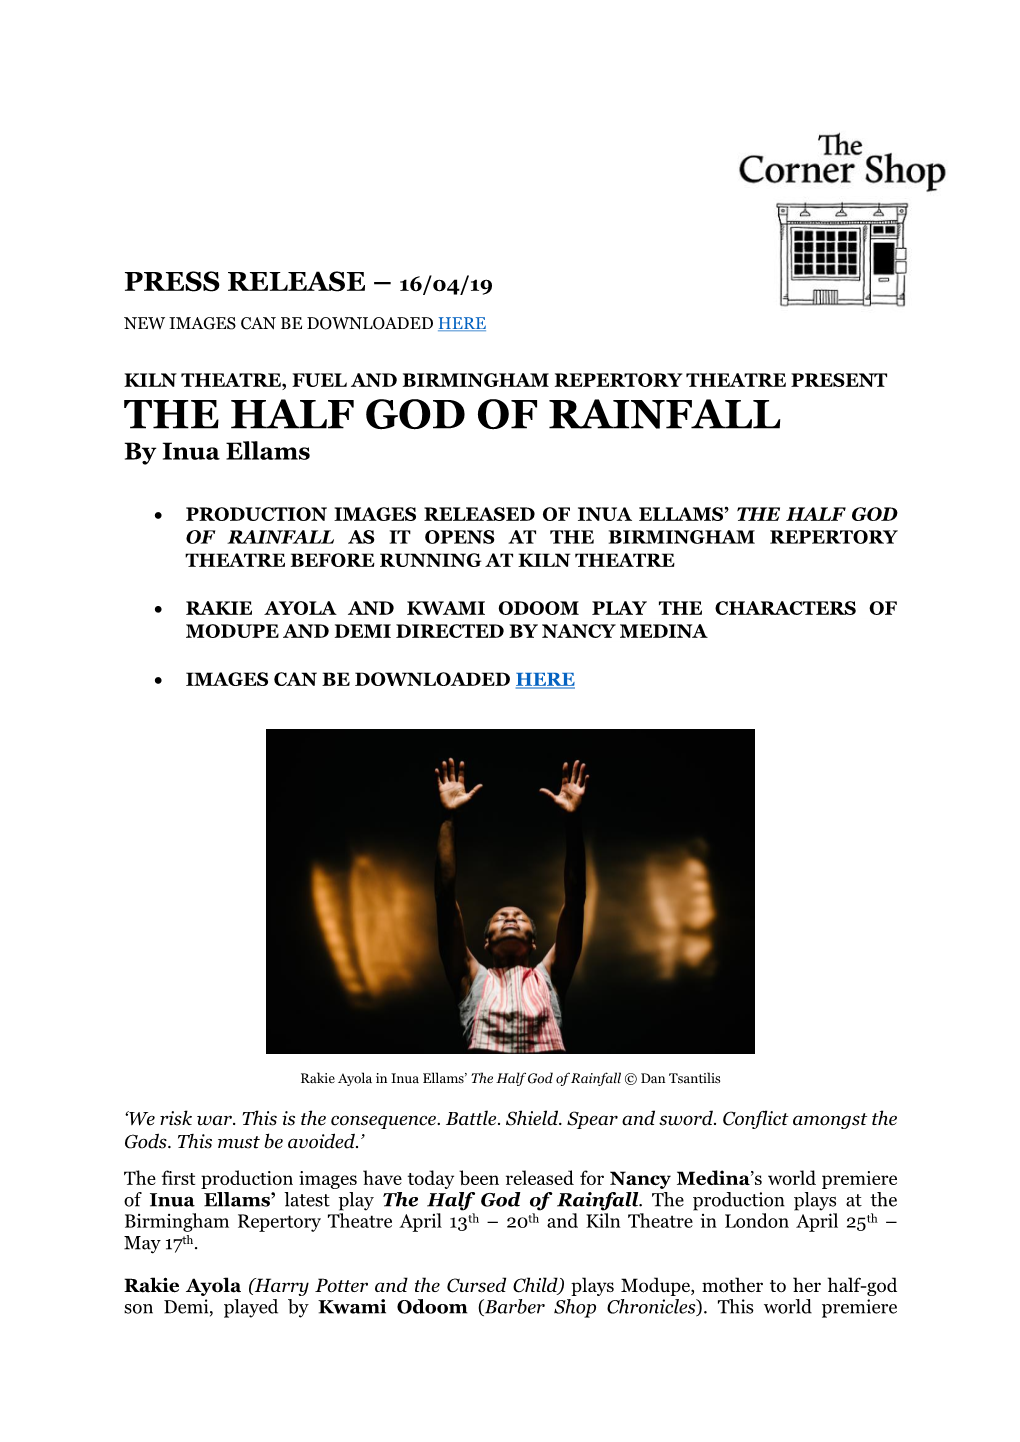 THE HALF GOD of RAINFALL by Inua Ellams